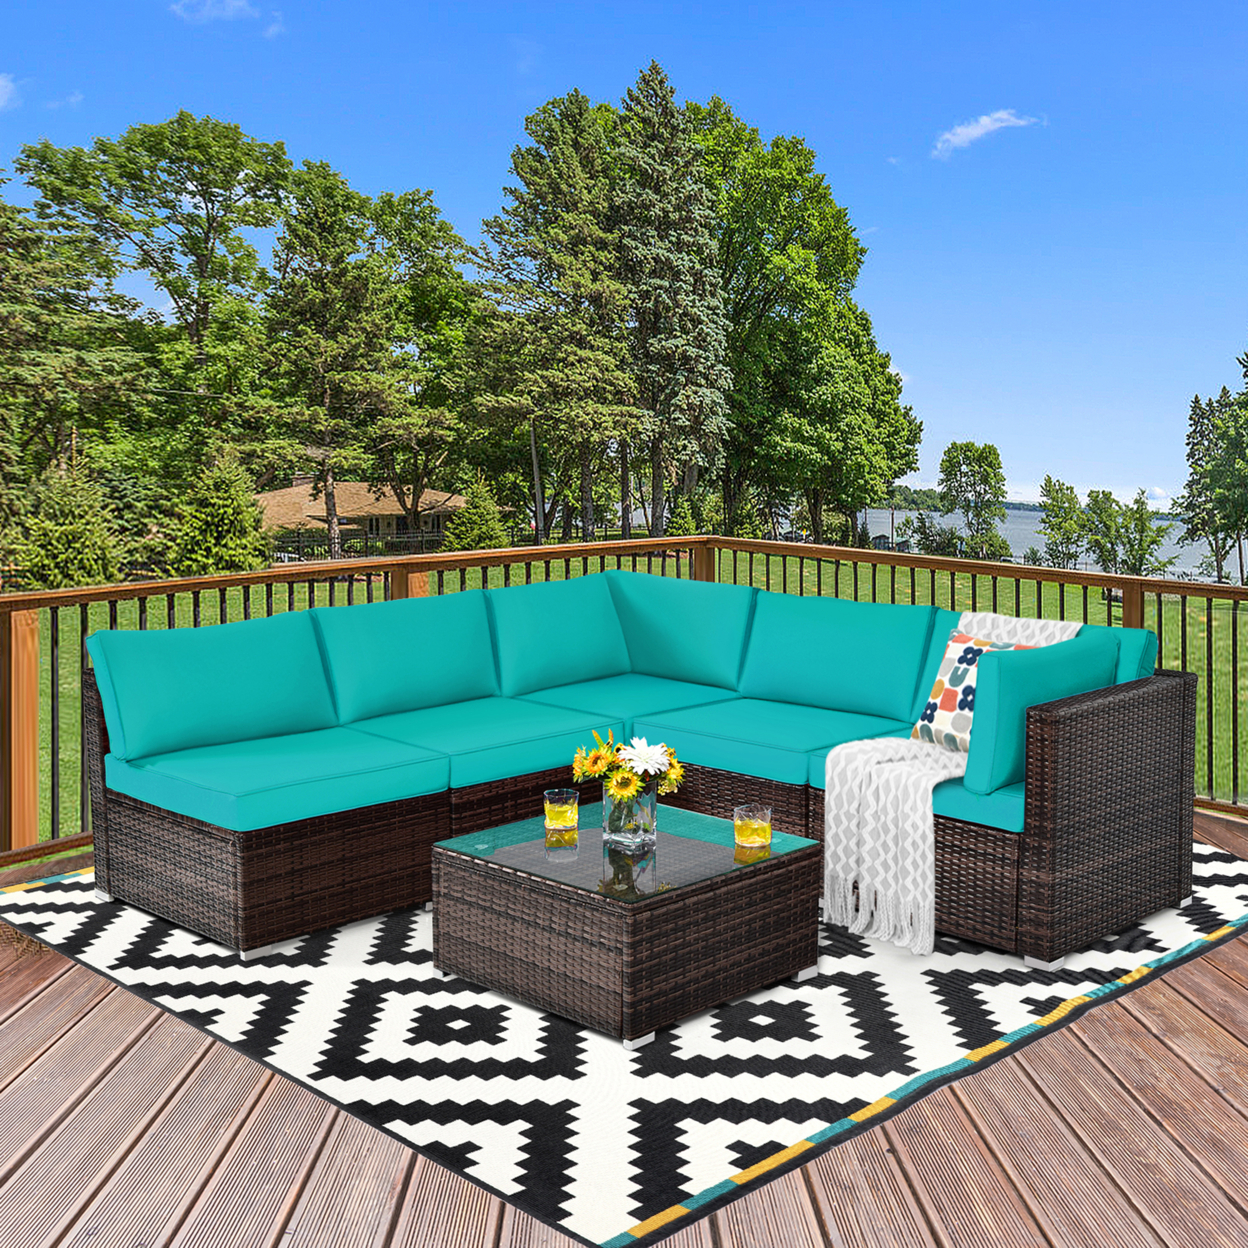 6PCS Rattan Outdoor Sectional Sofa Set Patio Furniture Set W/ Turquoise Cushions